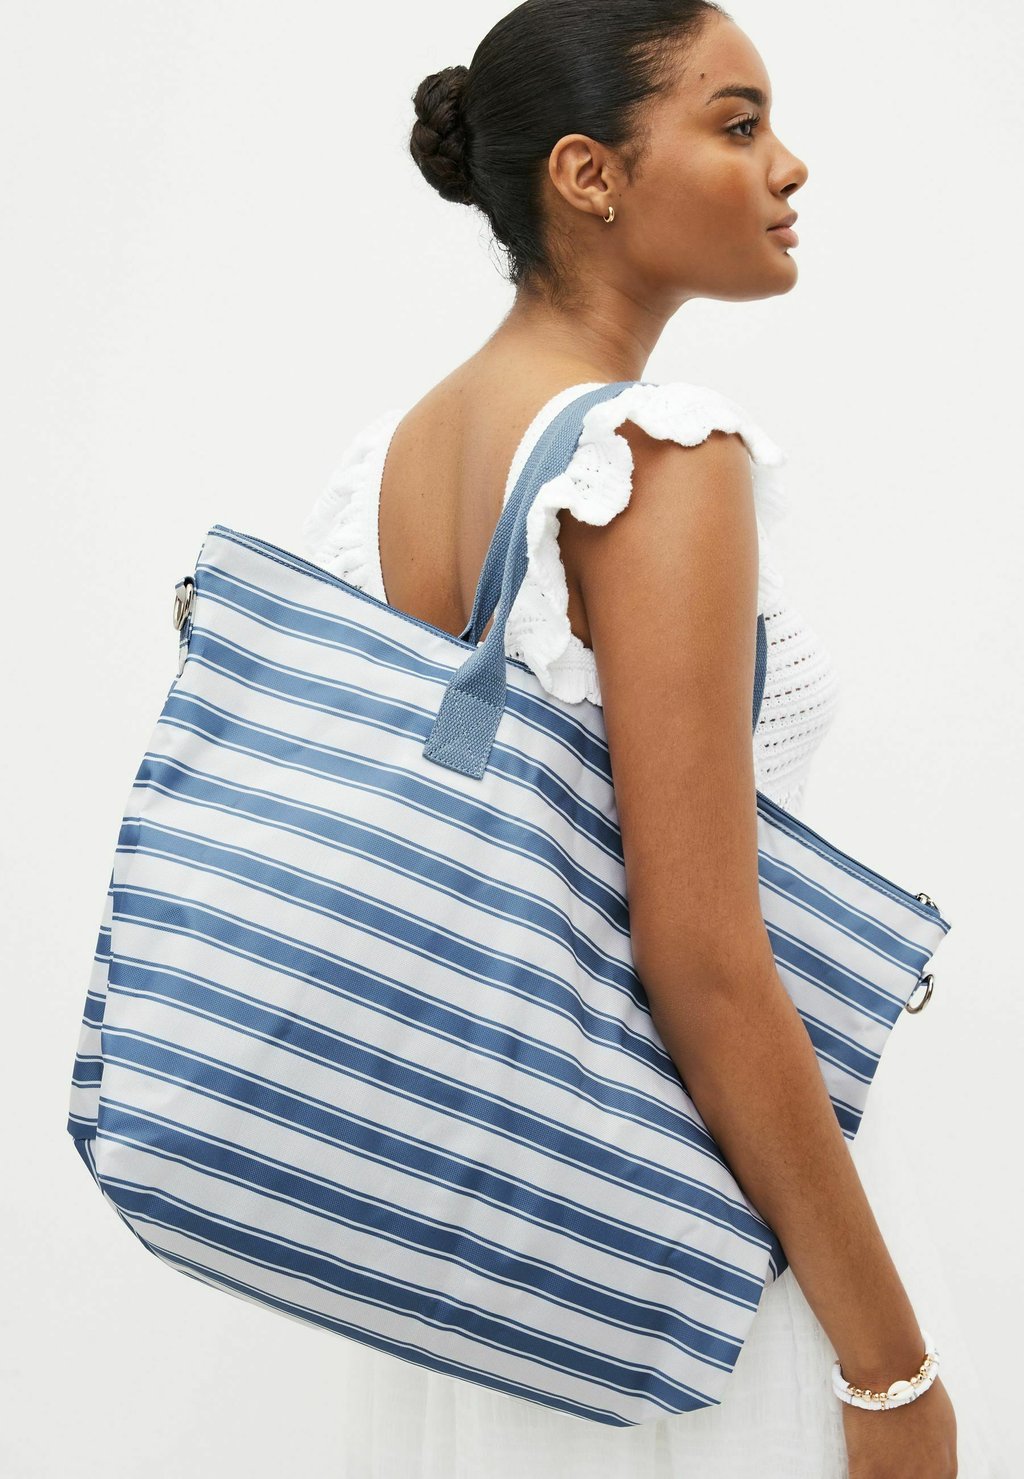 сумка stripe foldaway set next цвет multi colour Сумка STRIPE FOLDAWAY SET Next, цвет blue stripe